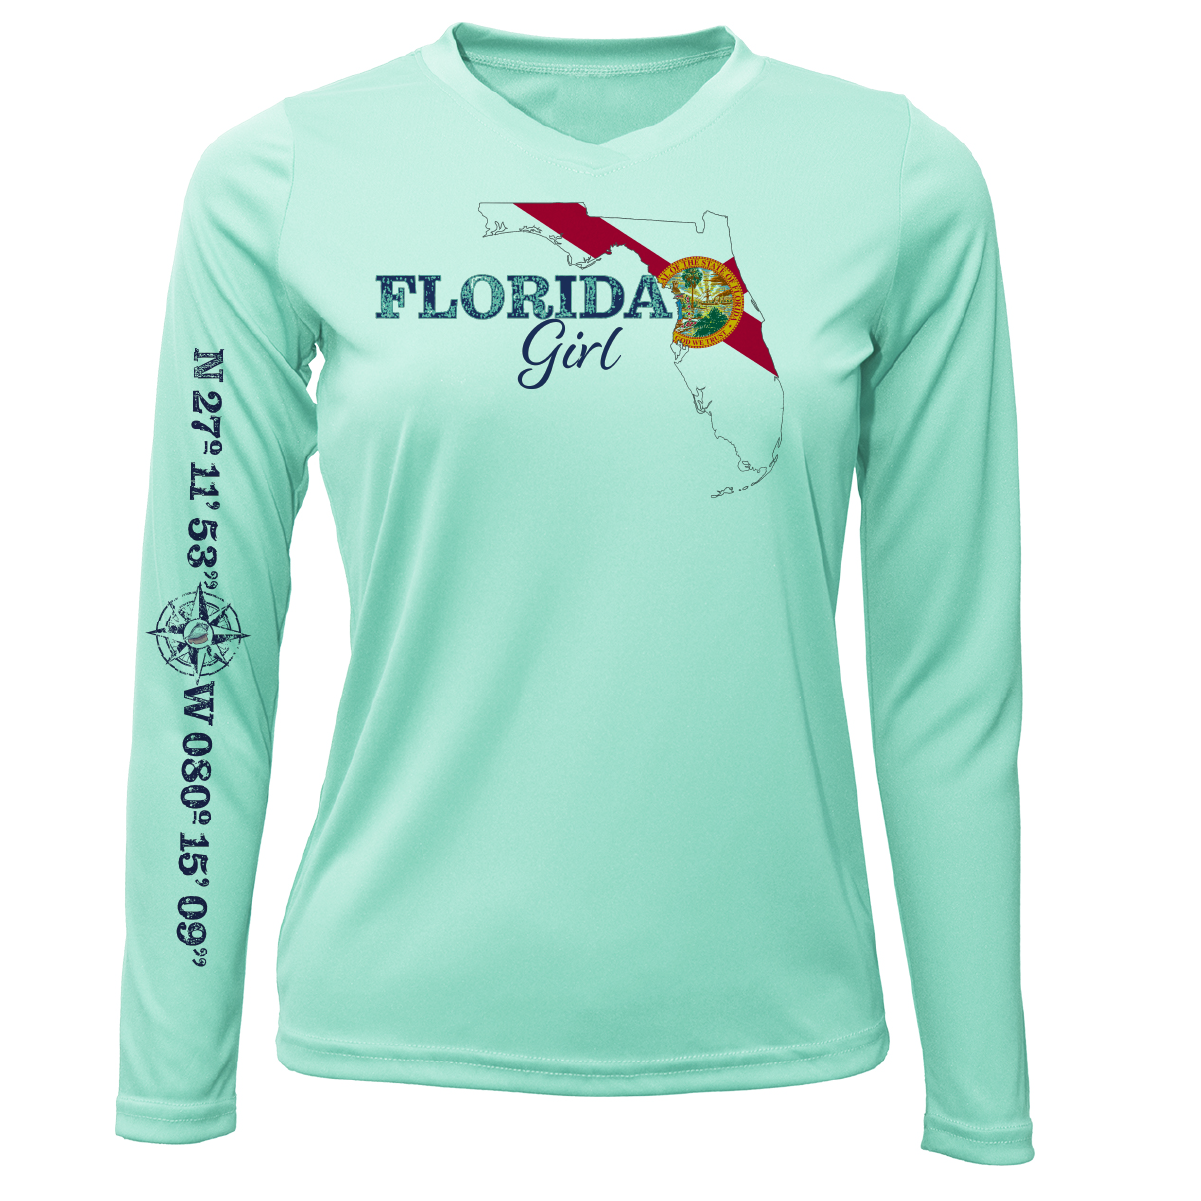 Lat/Long Stuart Florida Girl Long Sleeve UPF 50+ Dry-Fit Shirt